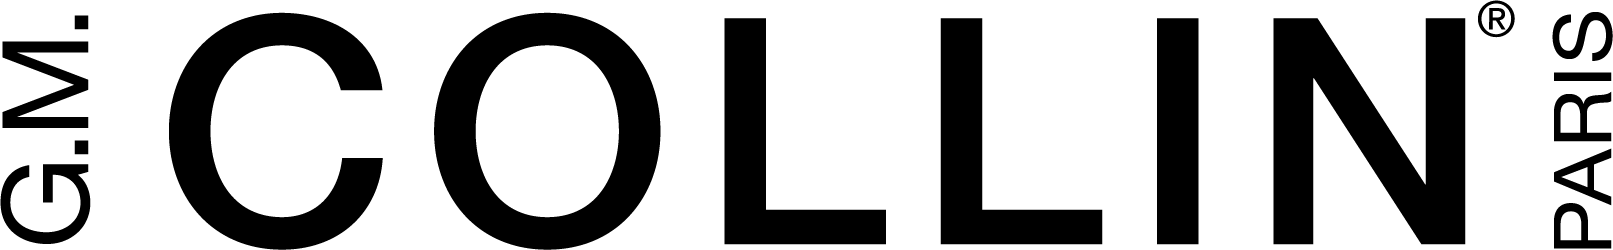 Logo GMC-hor-noir-NoBkg.png